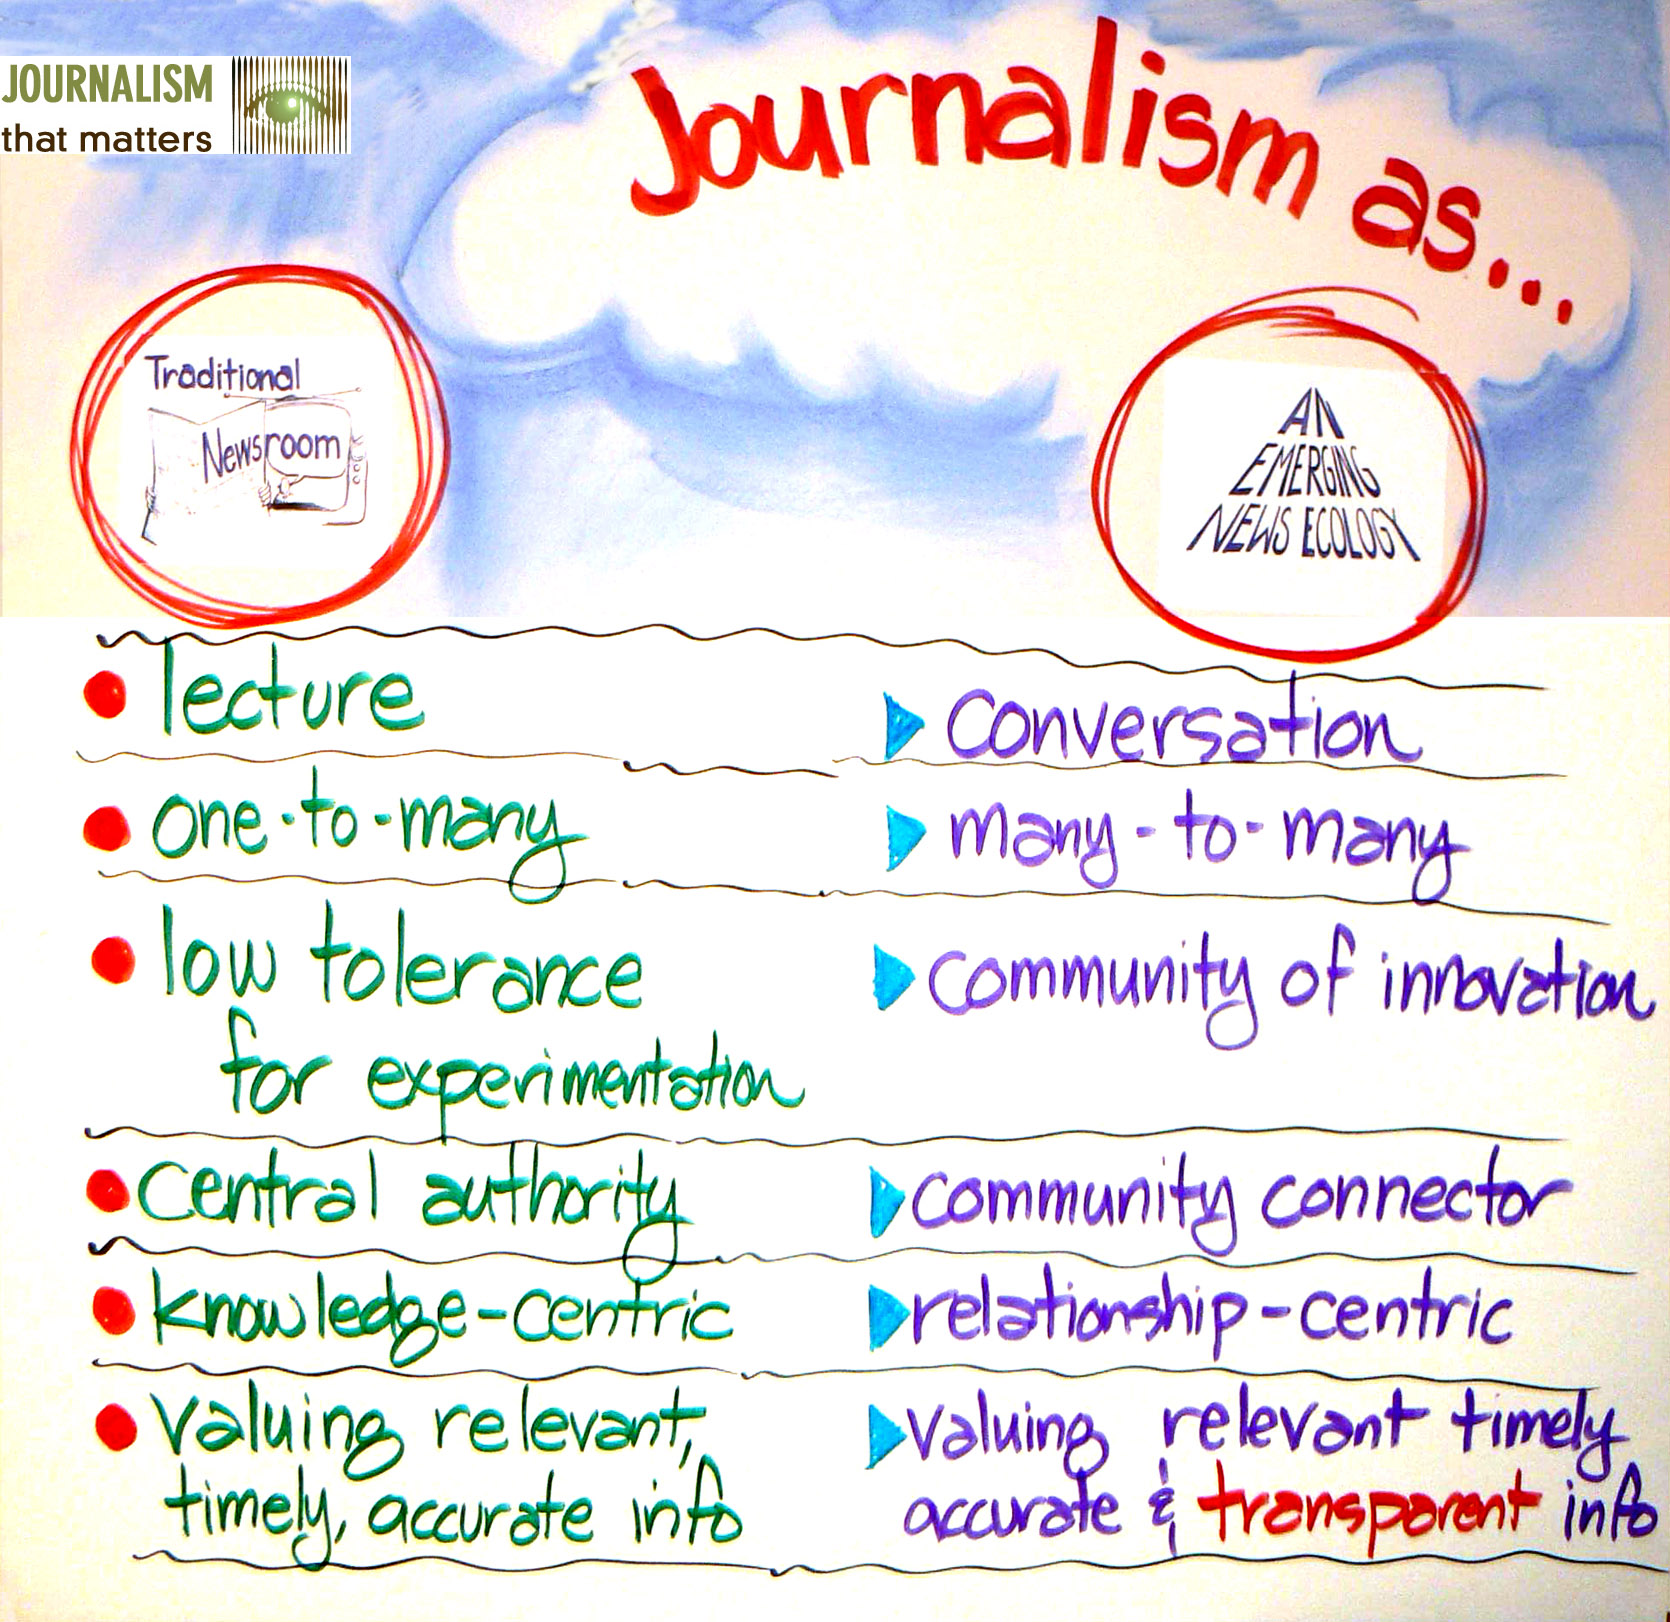 Qualities of a good journalist